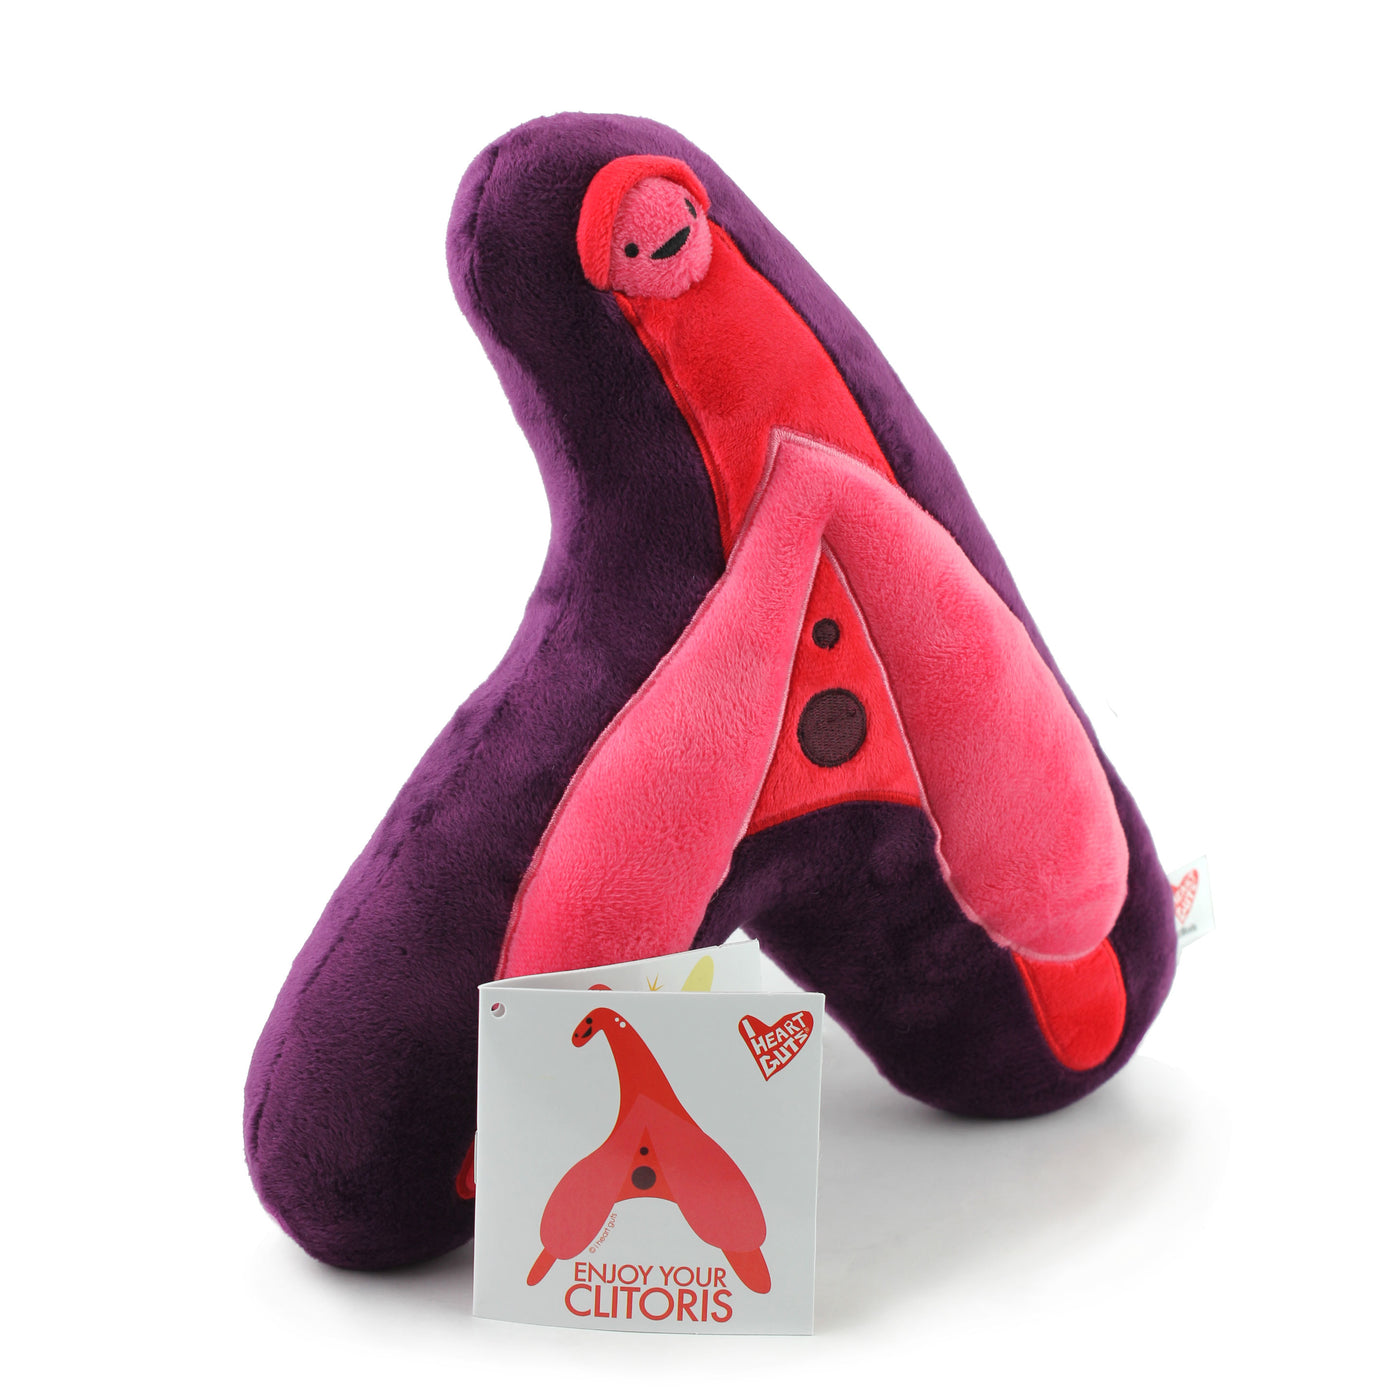 Clitoris Plushie - Enjoy Your Clitoris Organ Plush Stuffed Animal